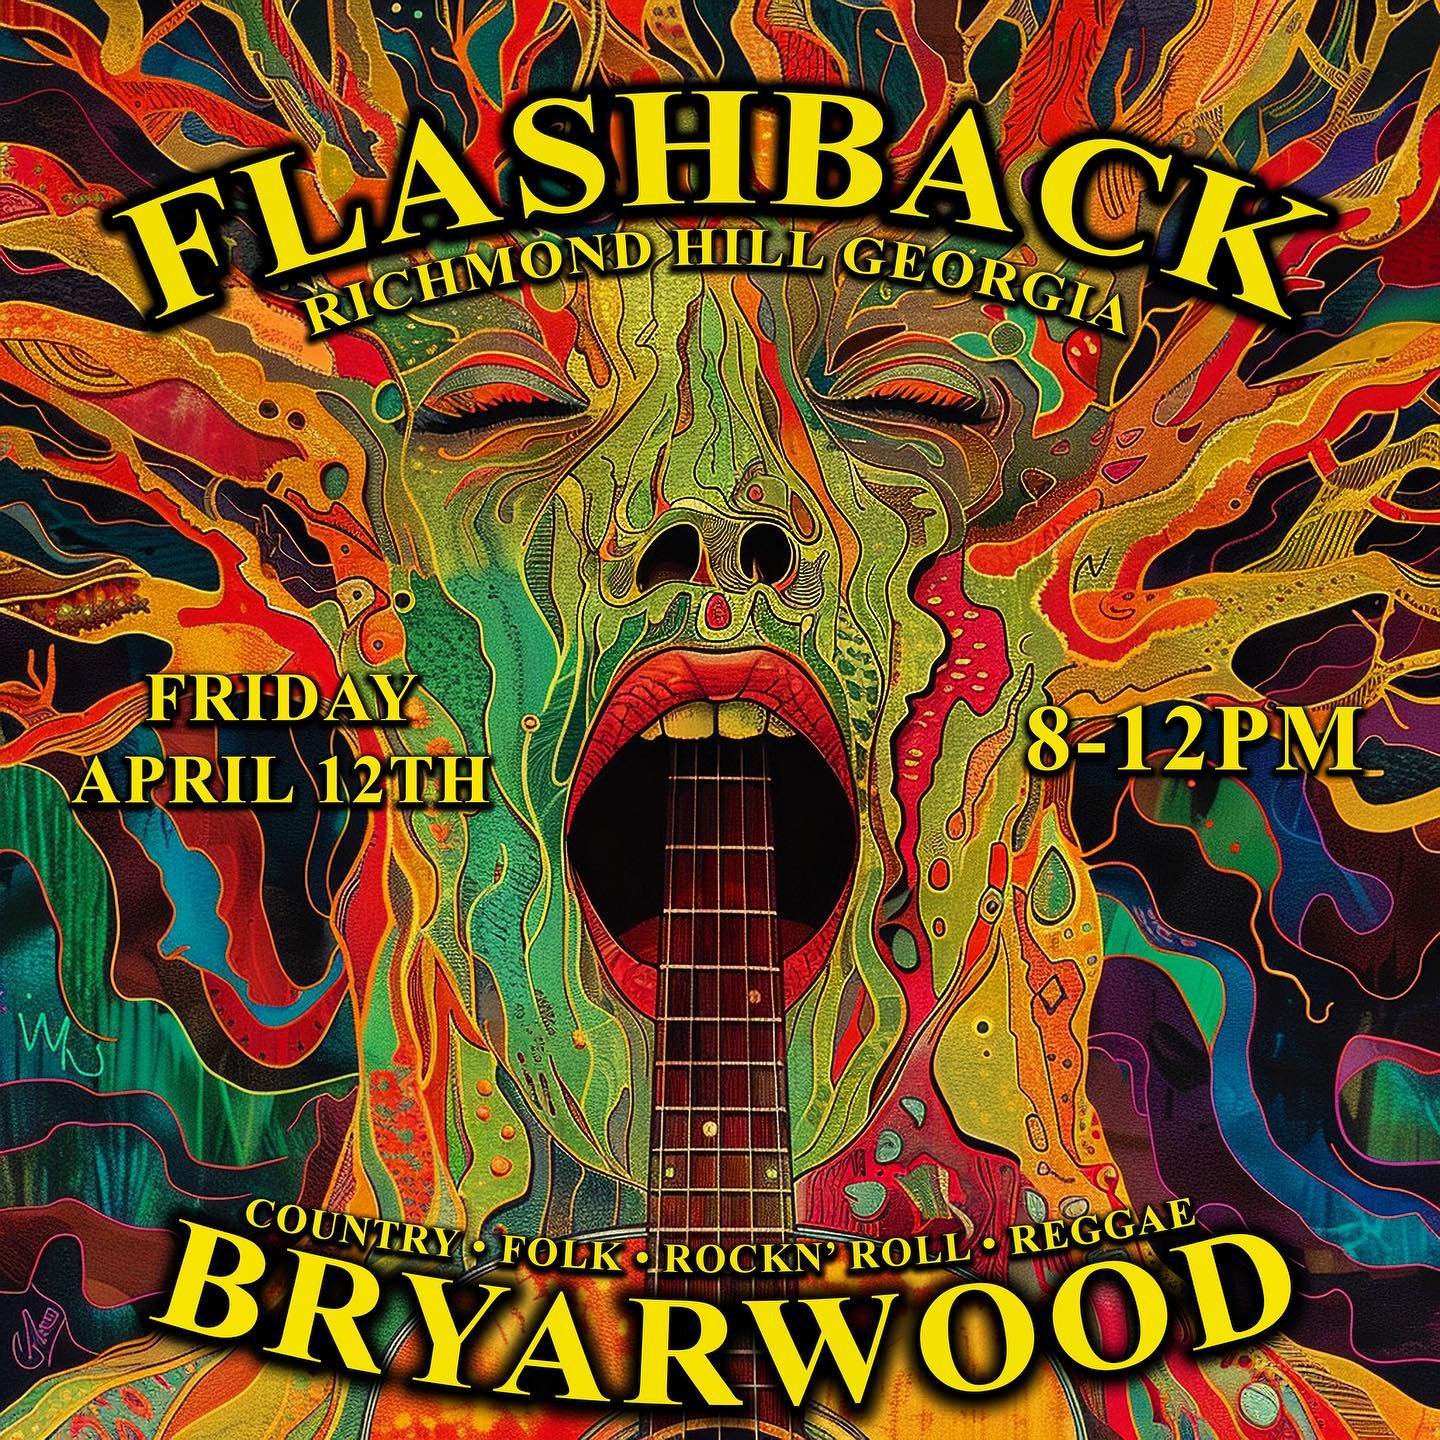 Bryarwood tonight at Flashback in #richmondhill  #georgia #richmondhillga #livemusic #savannah #savannahbands